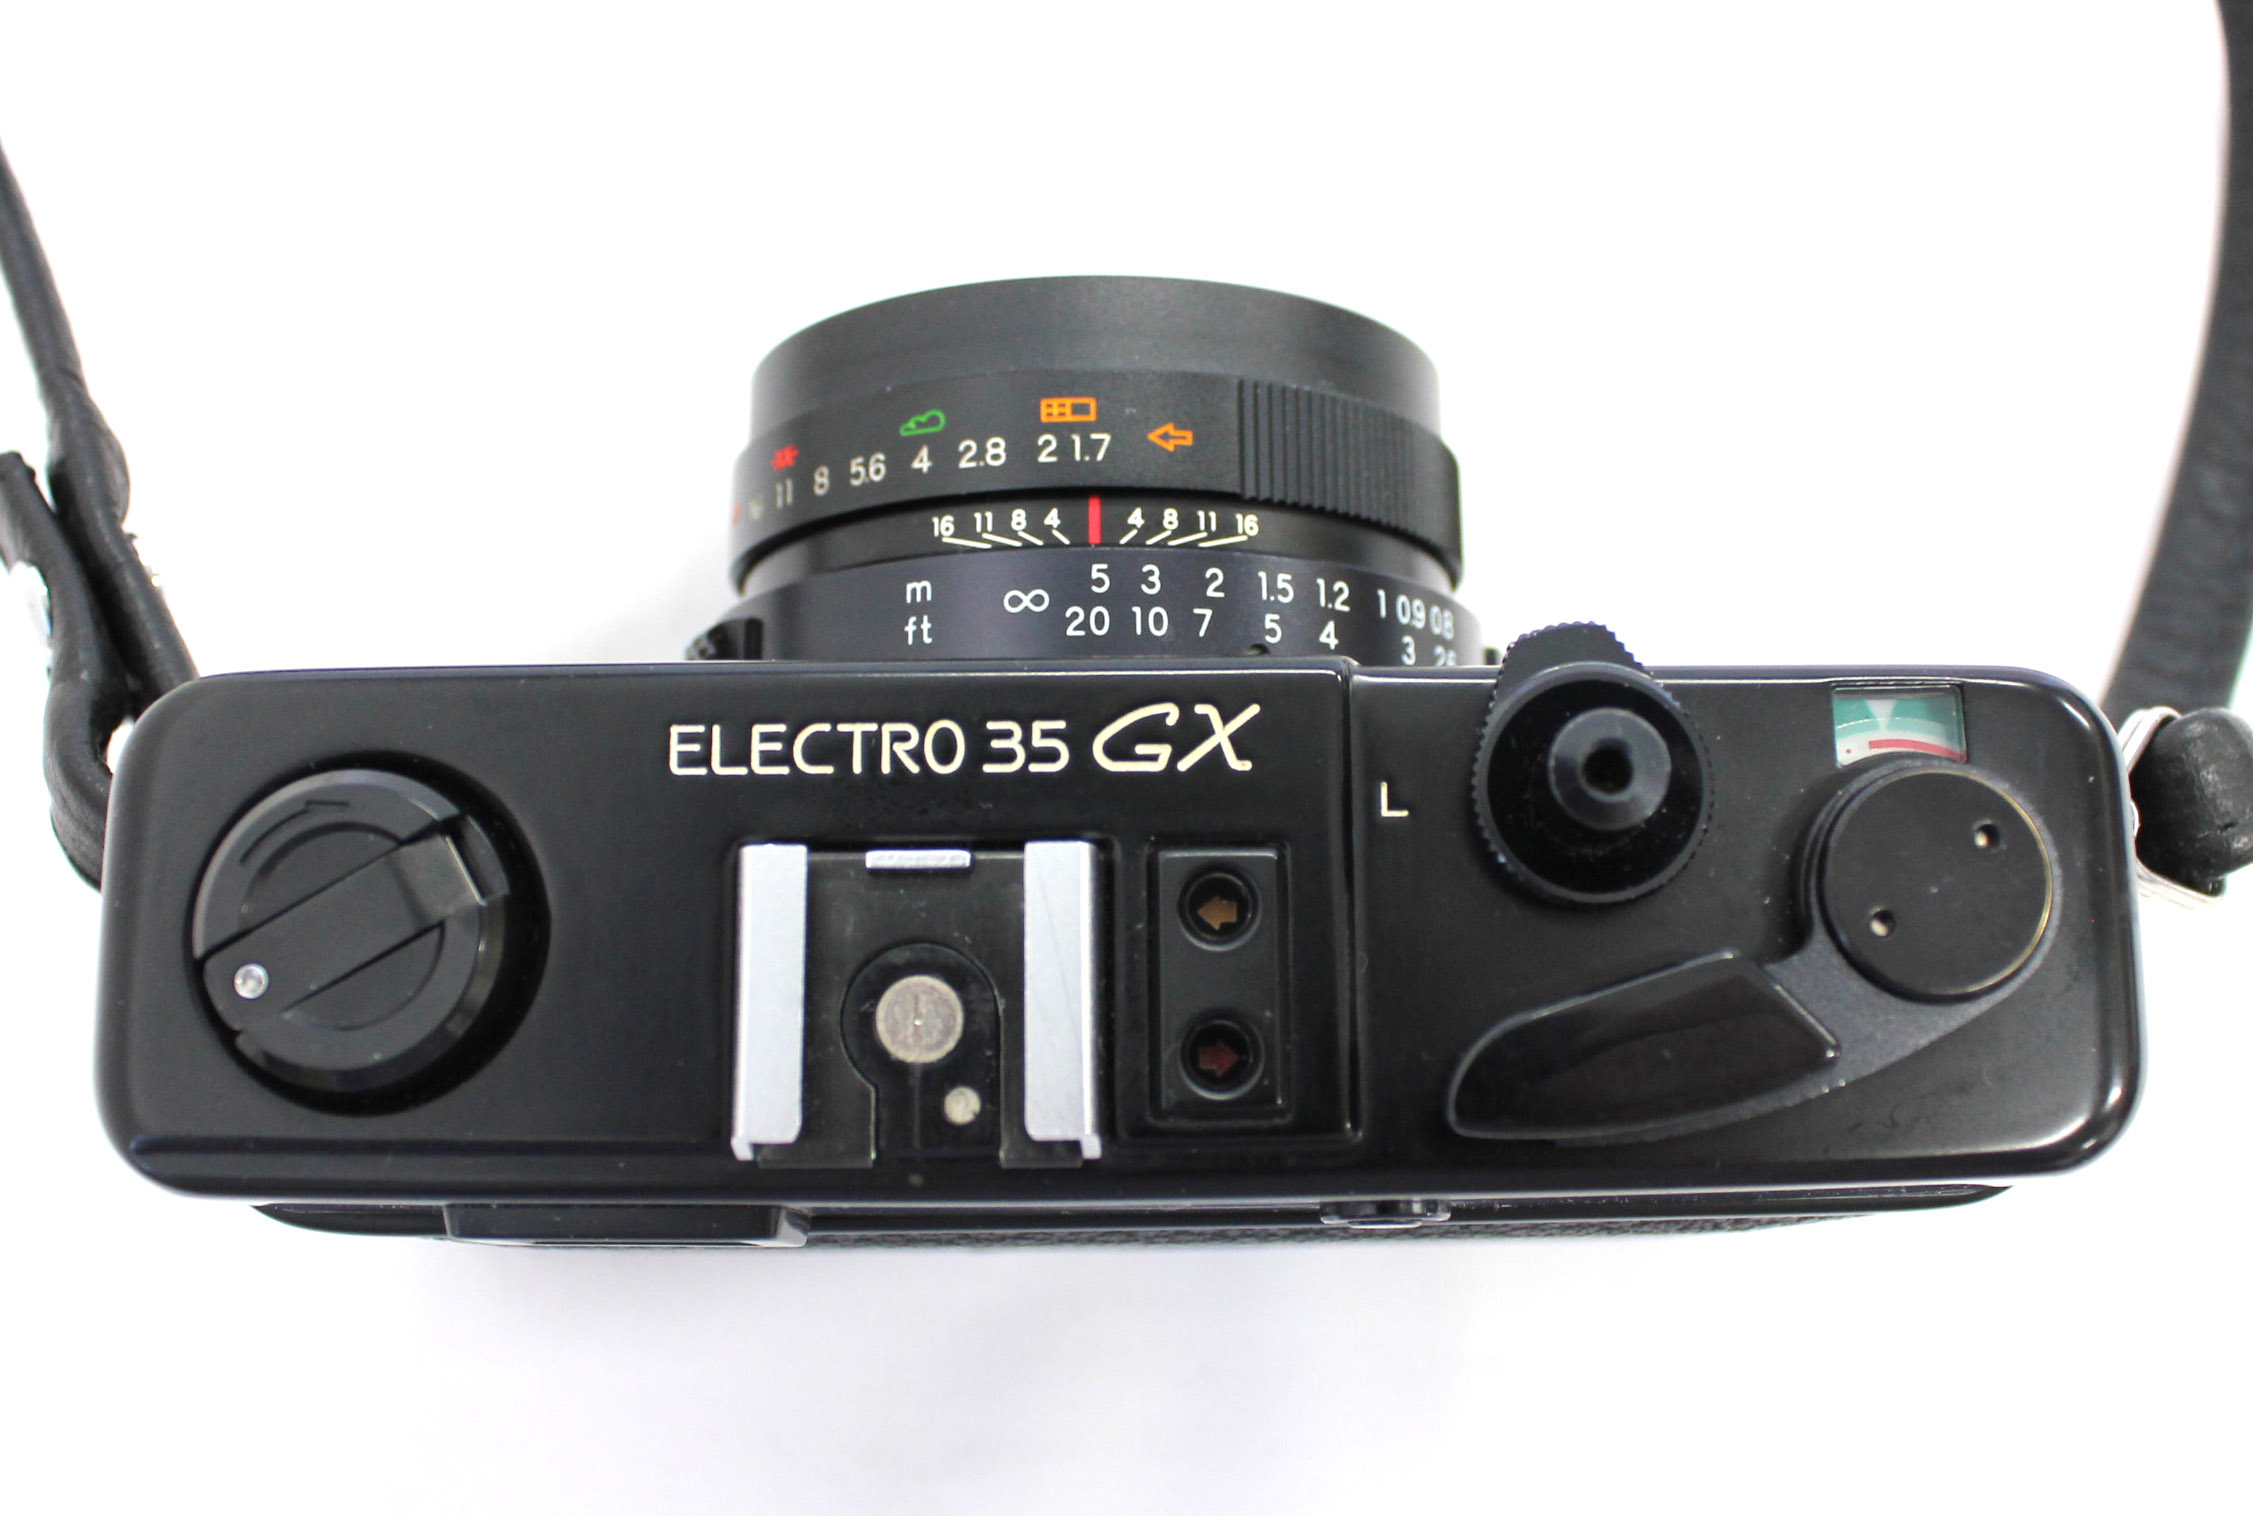  Yashica Electro 35 GX Rangefinder Camera Black w/40mm F/1.7 Lens from Japan Photo 7